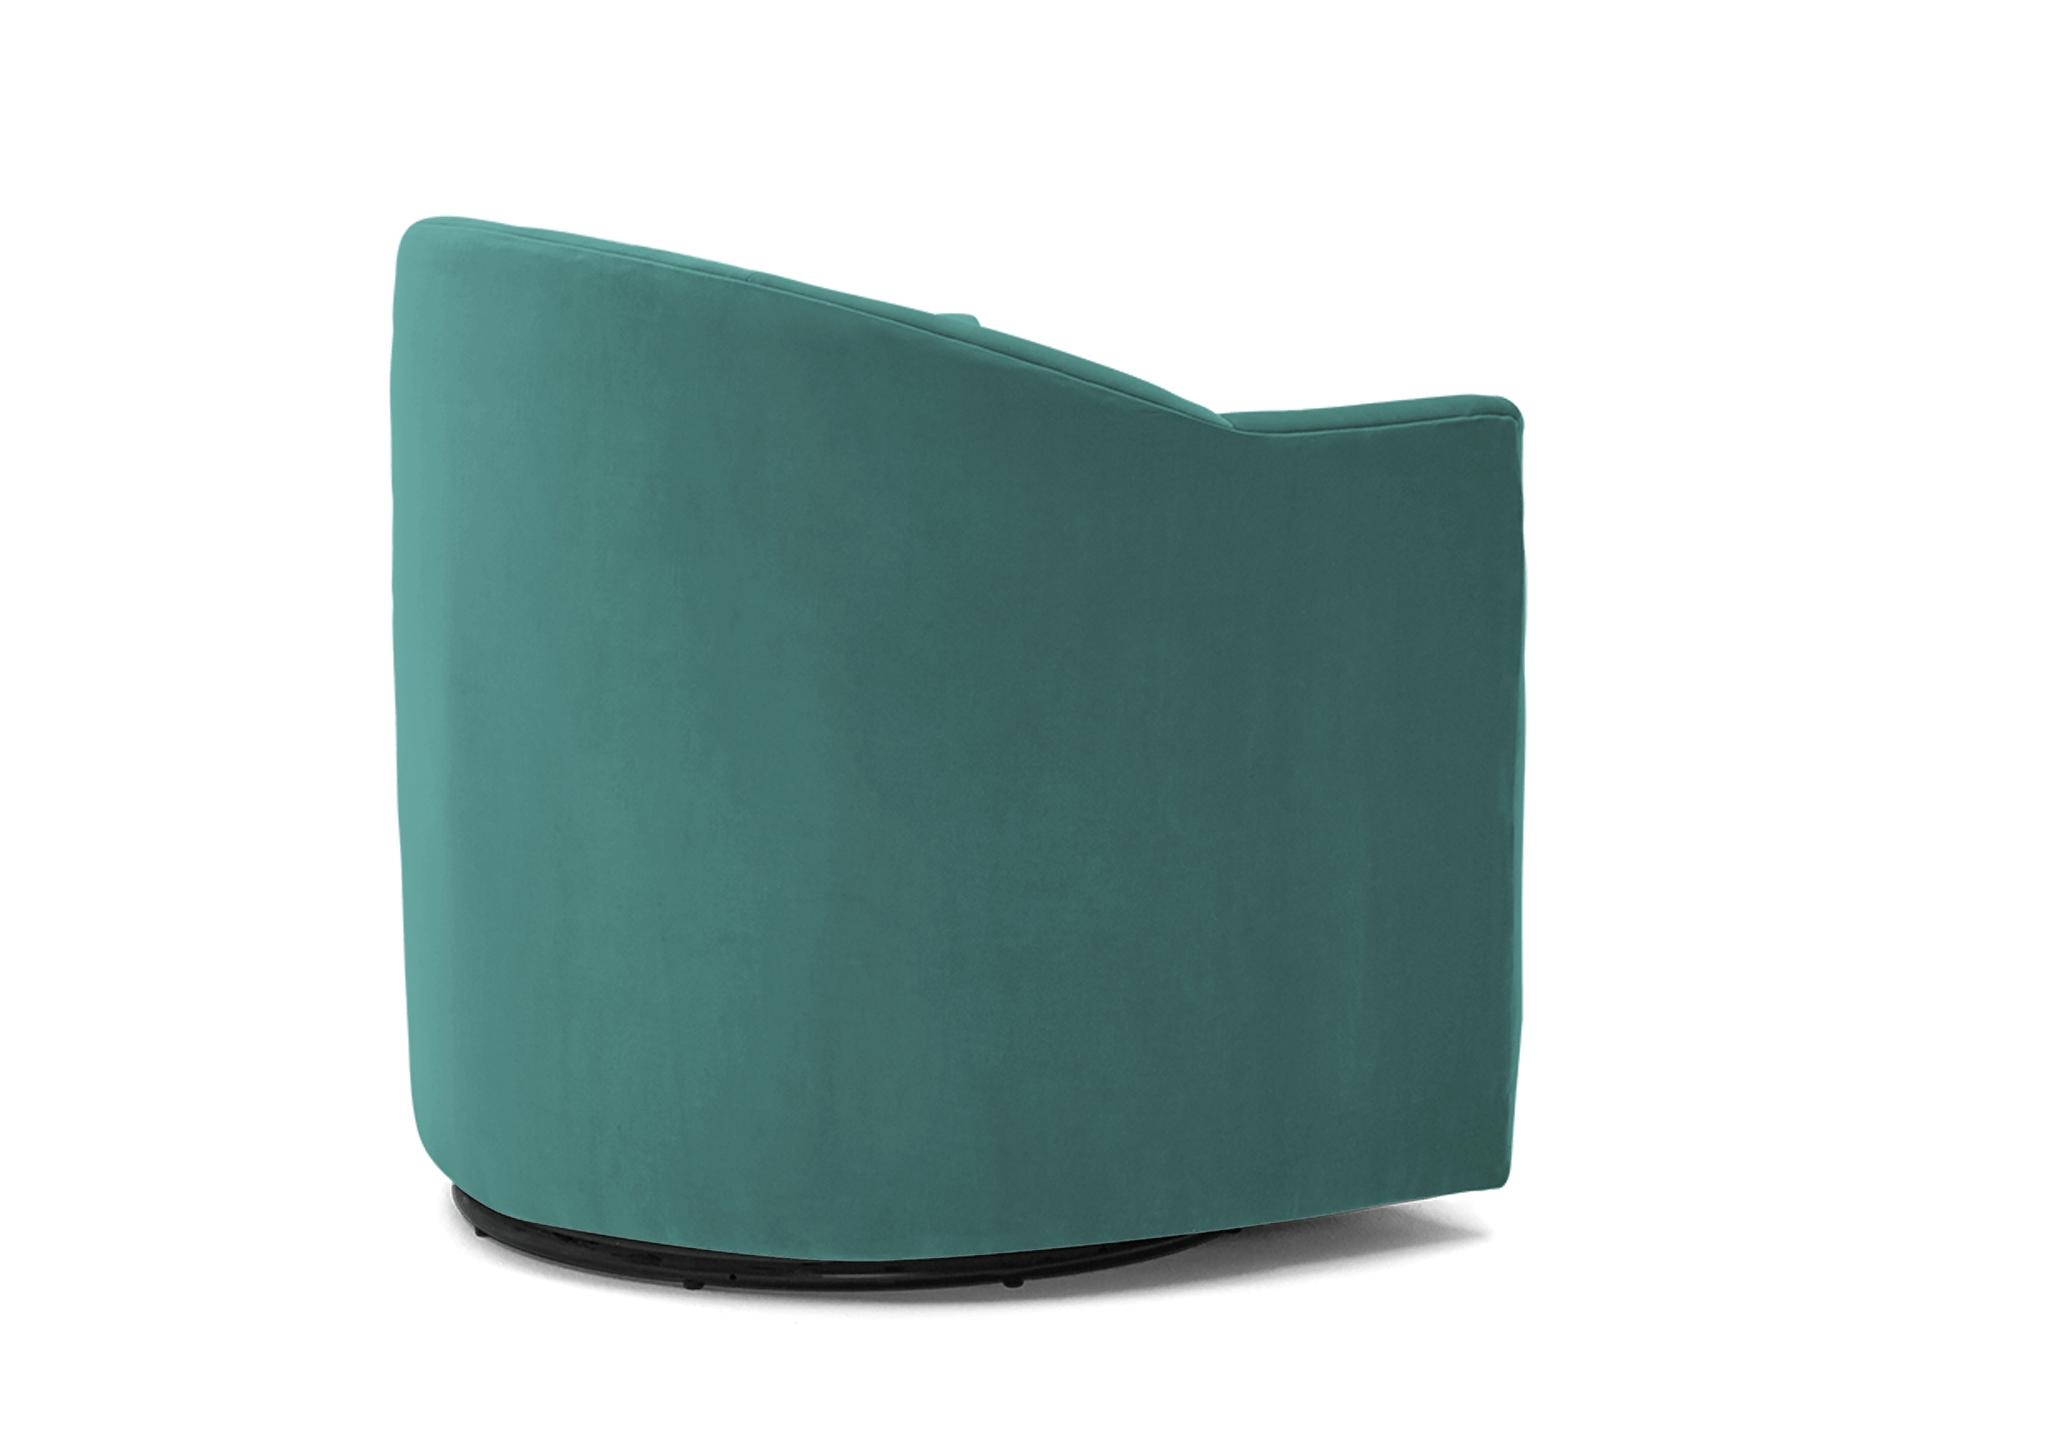 Green Jolie Mid Century Modern Swivel Chair - Essence Aqua - Image 3